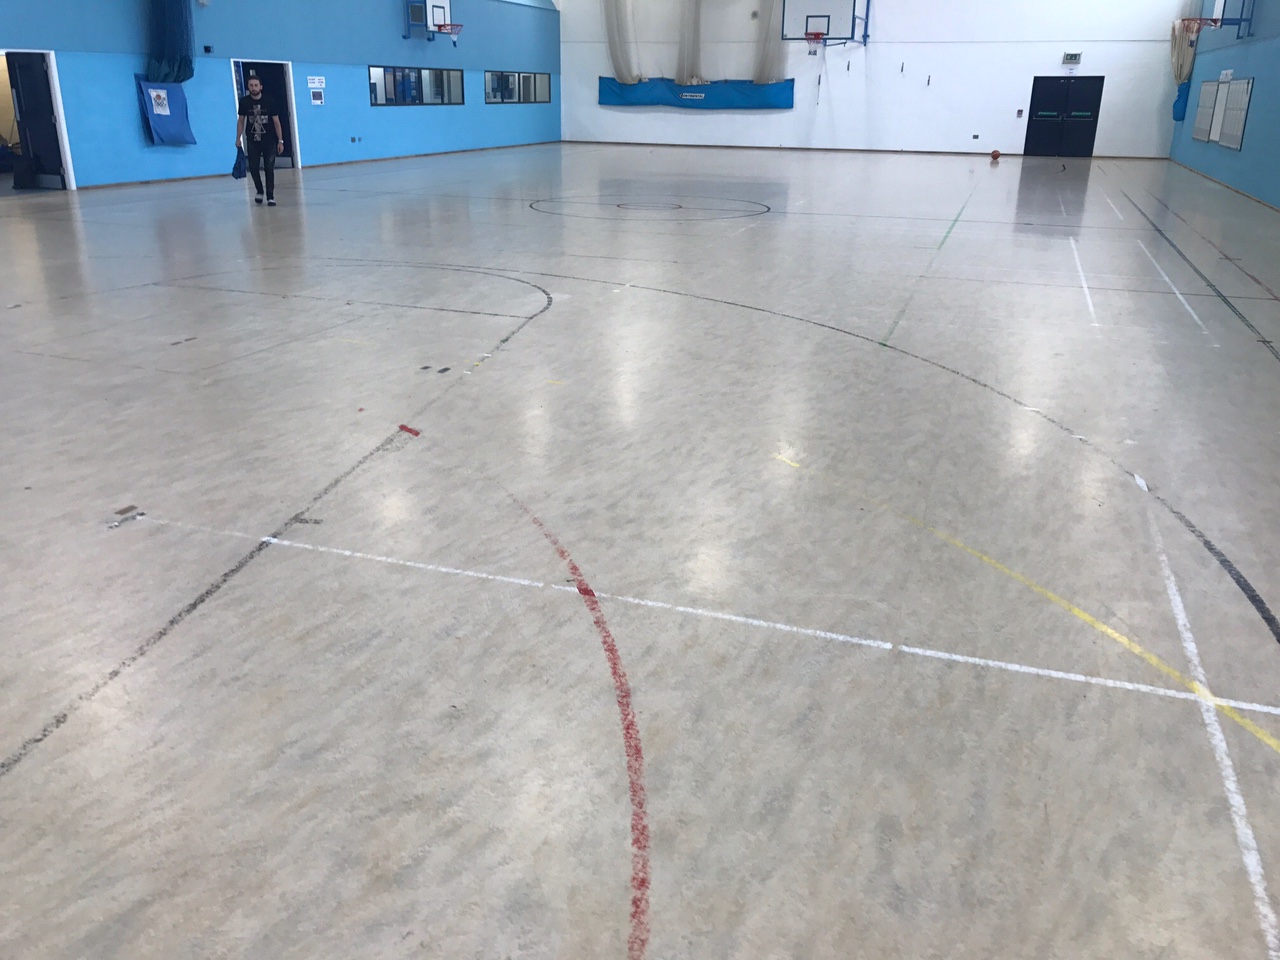 Indoor school sports hall floor before pulastic refurbishment by Sports Surfaces UK